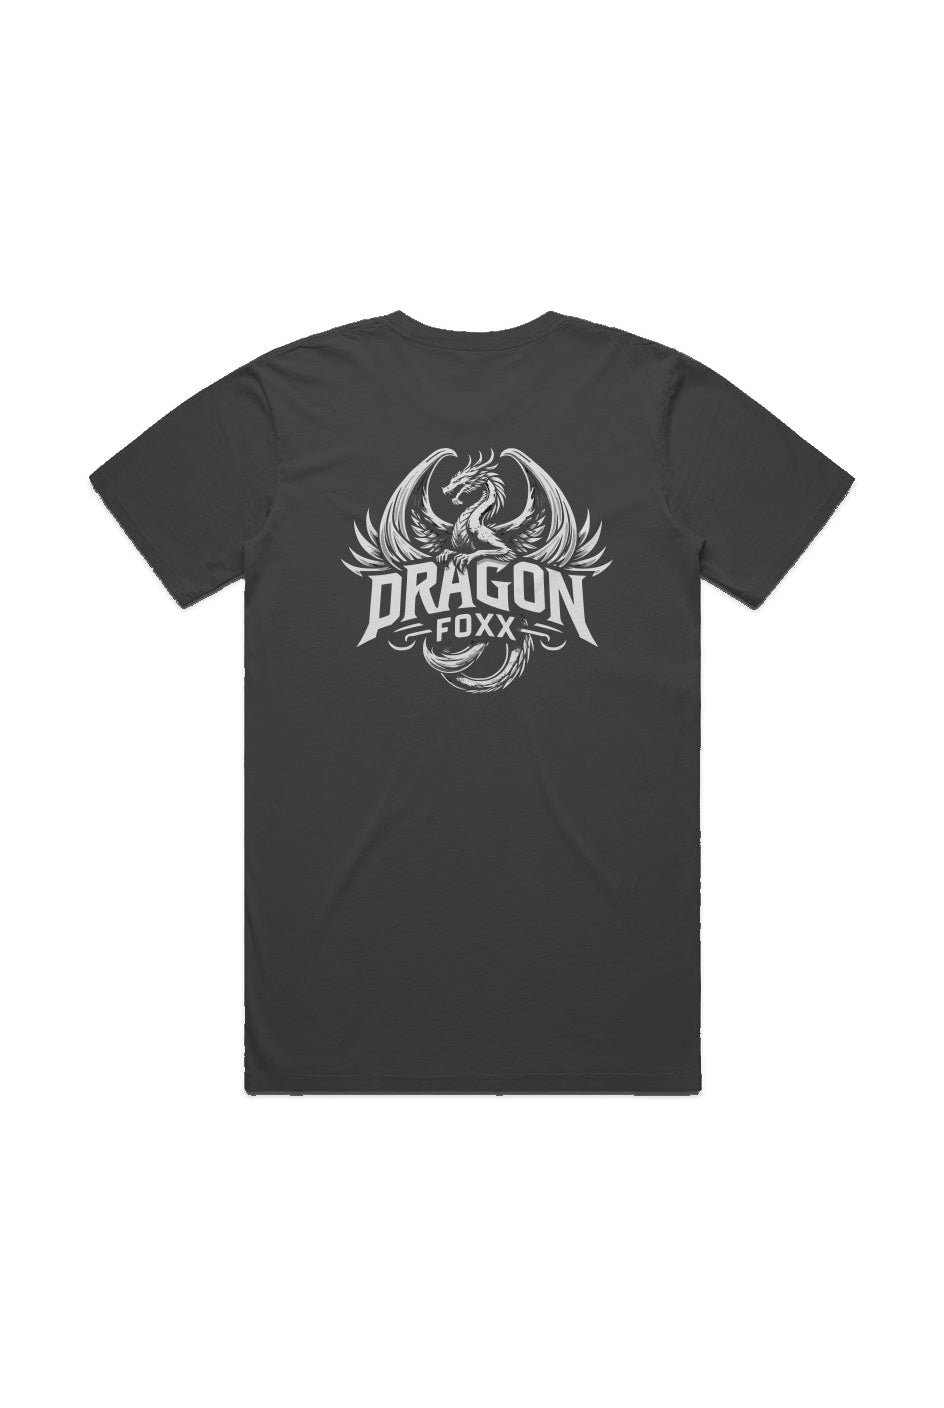 Men's White Dragon Faded Black Tee - Men's T-Shirts - Apliiq - Men's White Dragon Black Faded Tee - APQ-4587087S6A1 - s - Faded Black - Dragon Foxx™ - Dragon Foxx™ Men's Shirts - Dragon Foxx™ Men's T-shirt